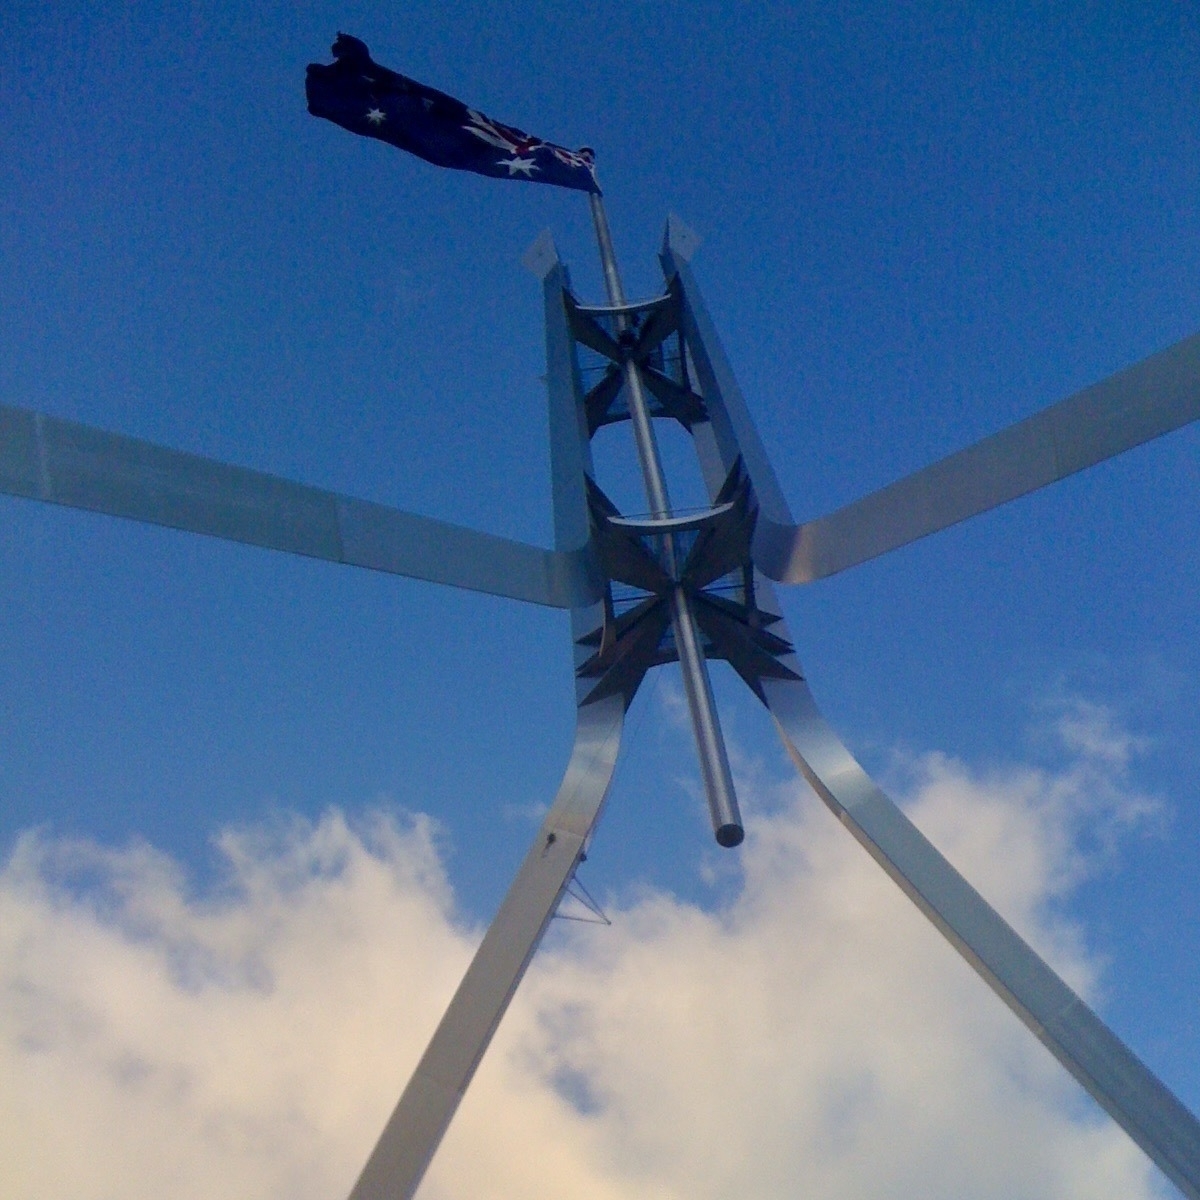 An Australian flag flutters against the blue sky above Canberra's Parliament House